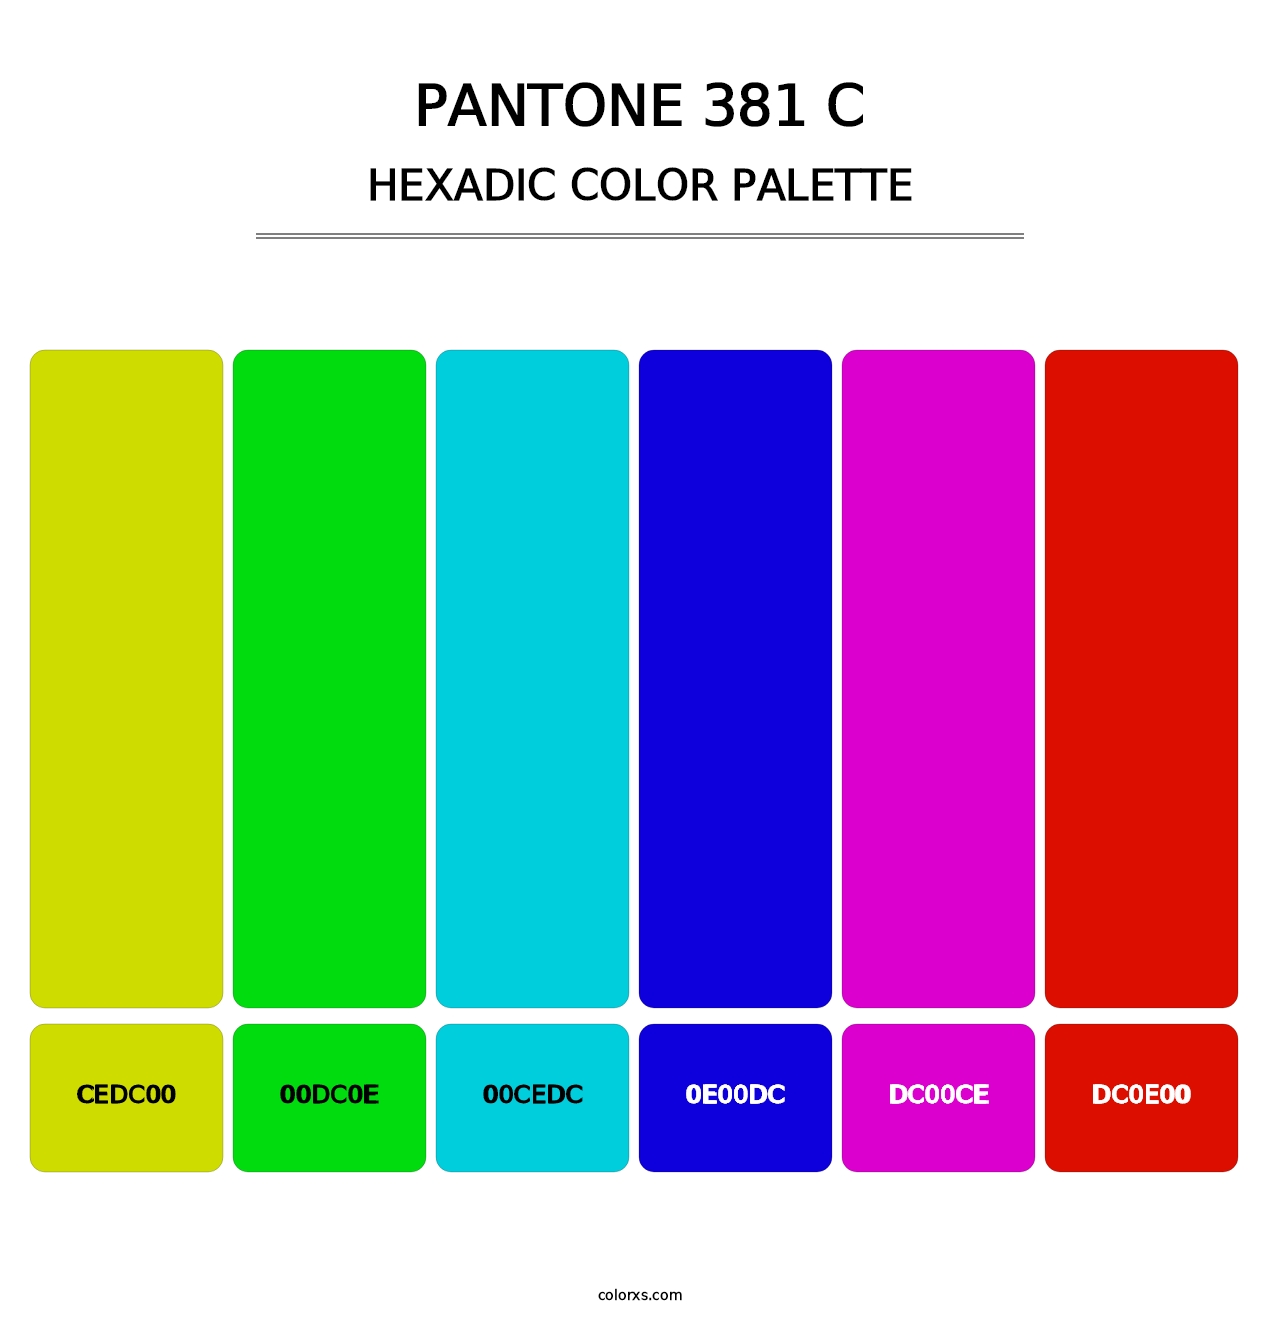 PANTONE 381 C - Hexadic Color Palette